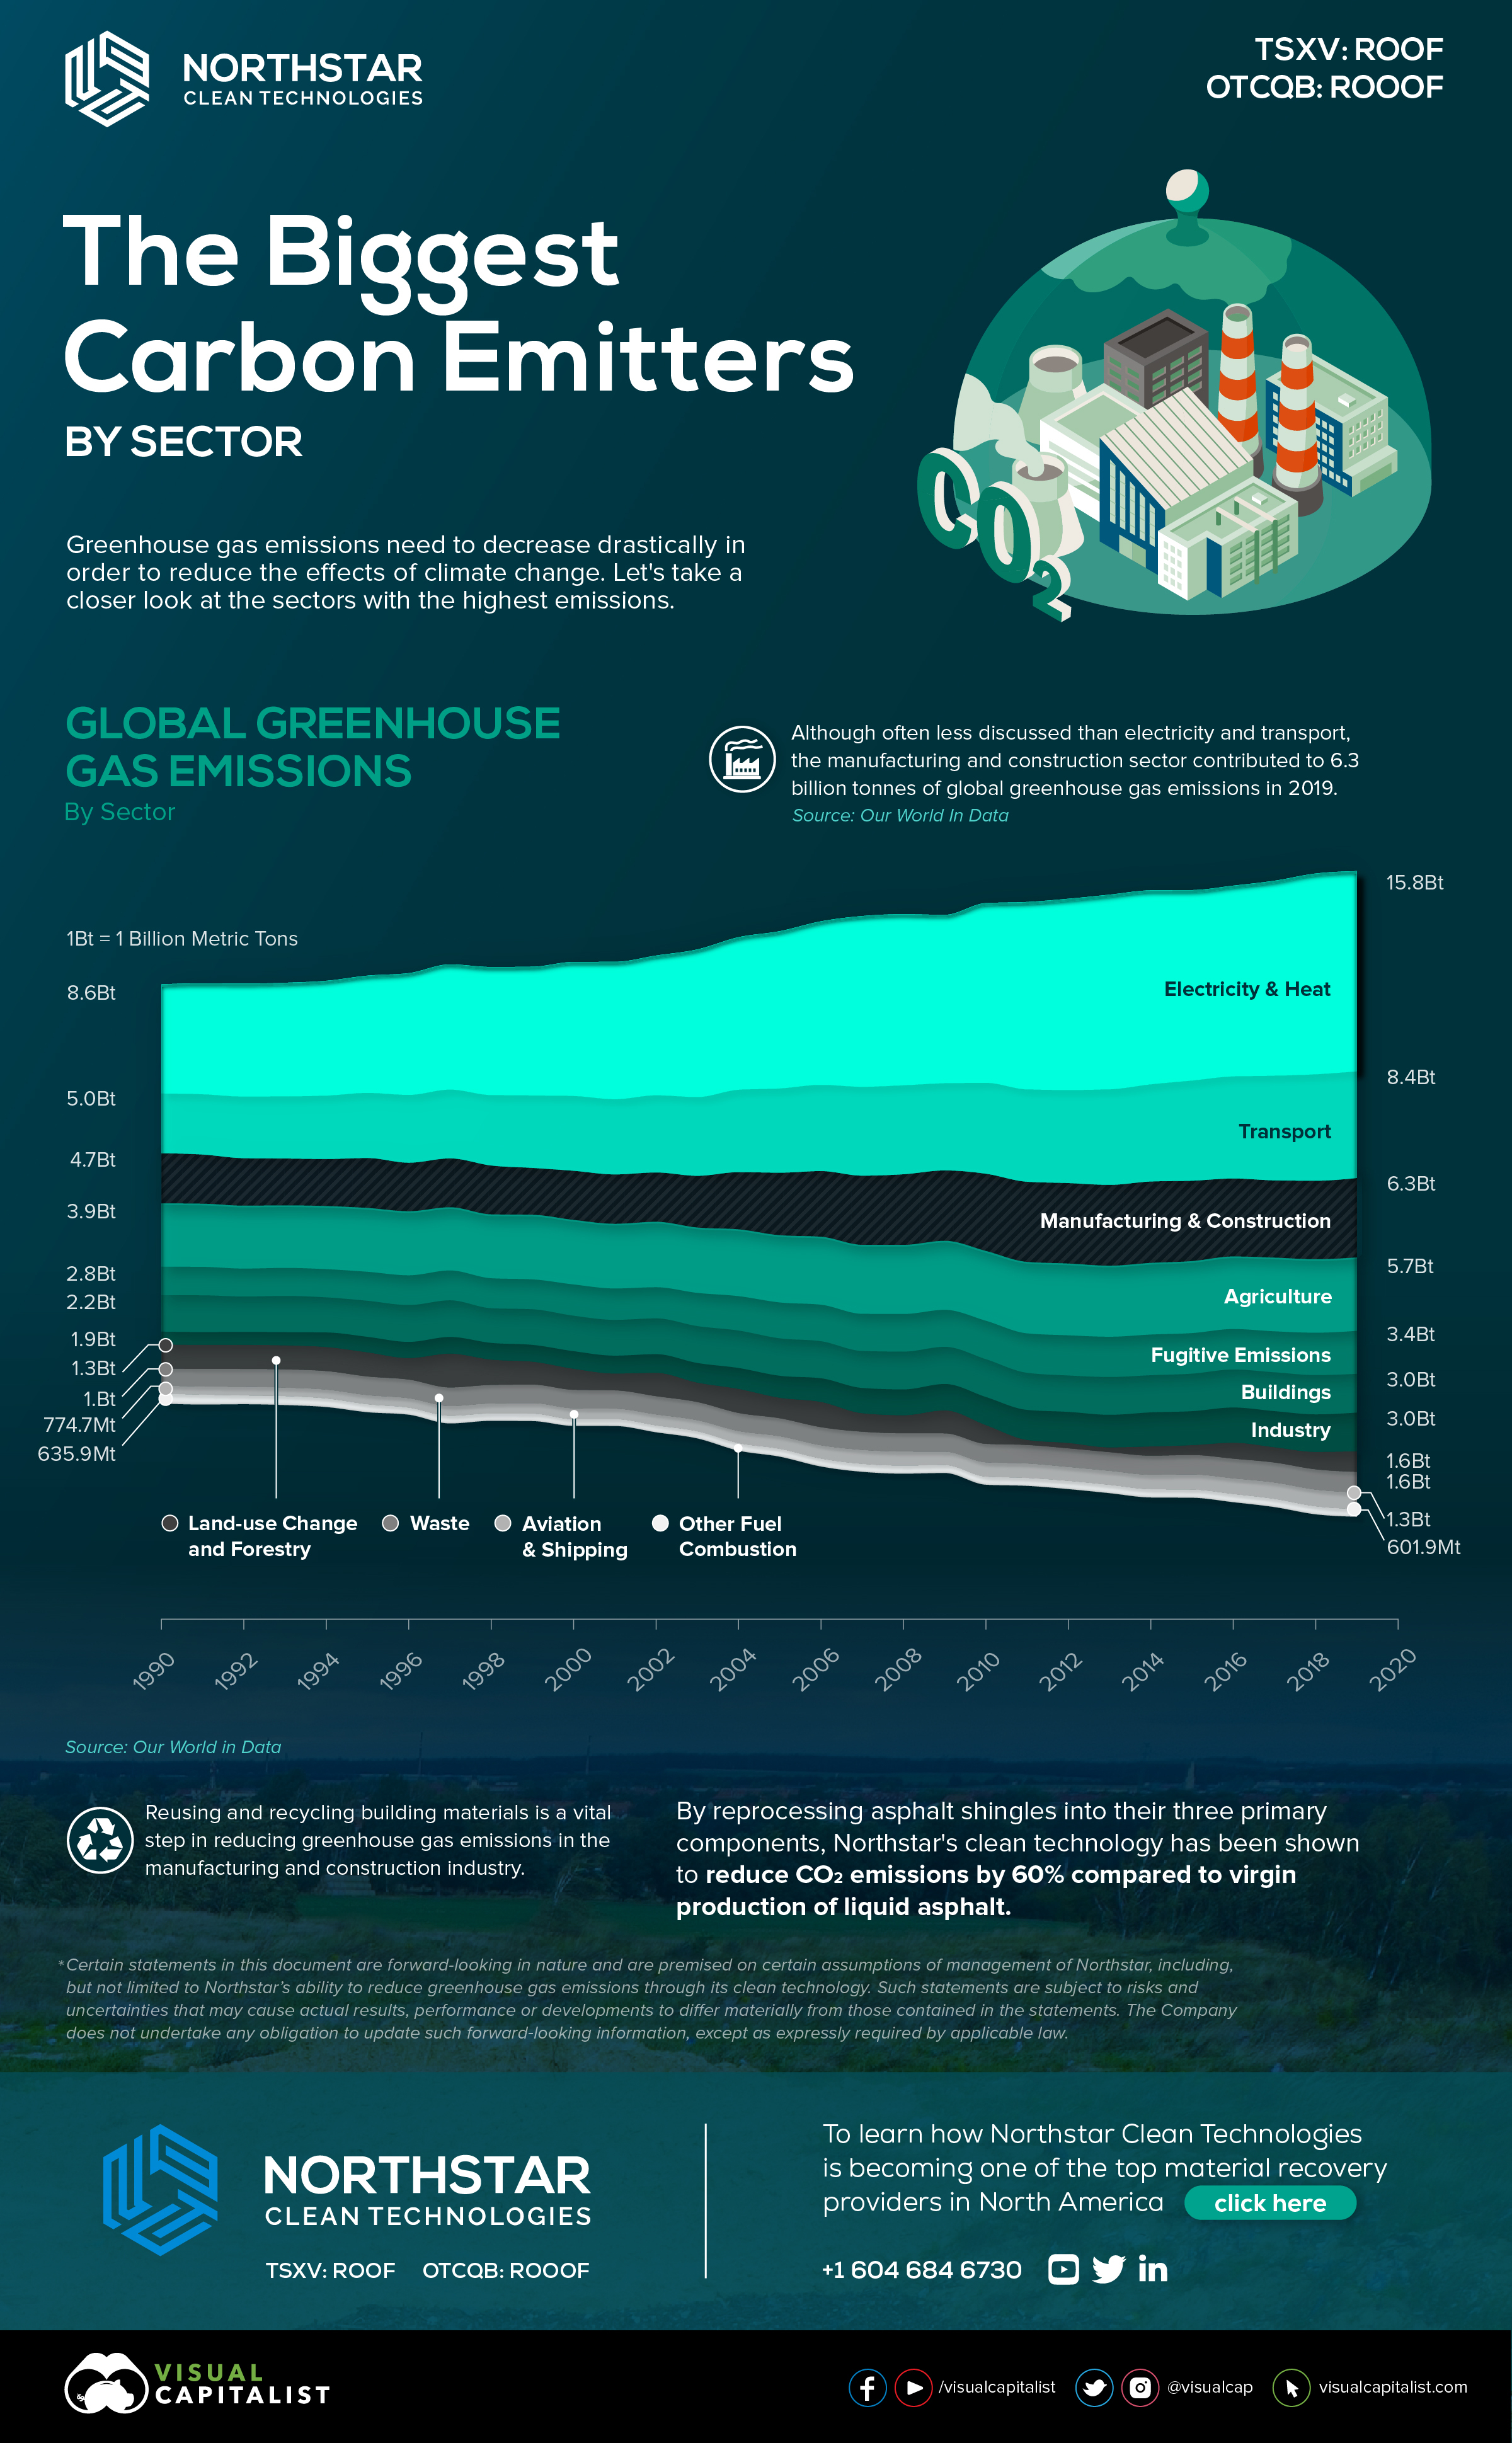 MIT's Greenhouse Gas Inventory